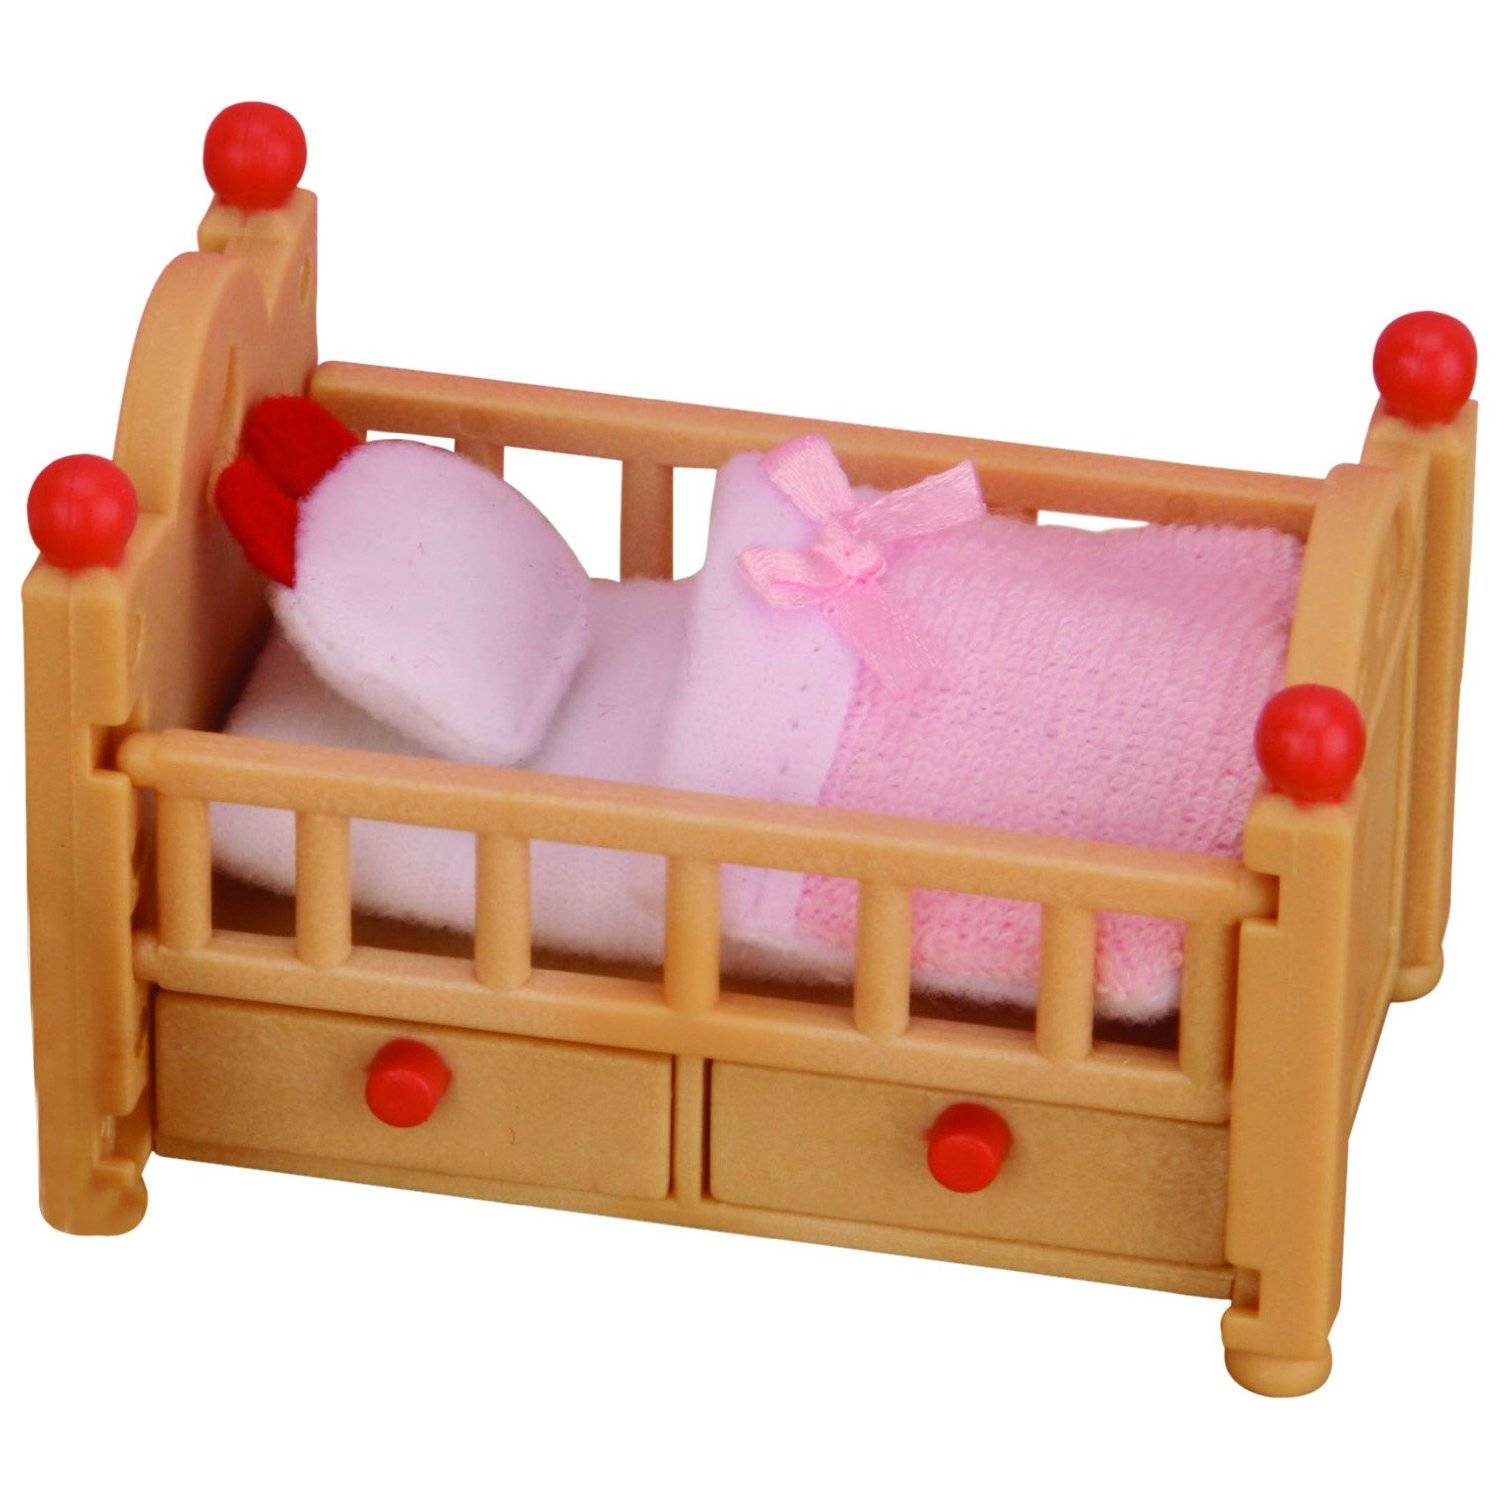 Премиум кровати для детей